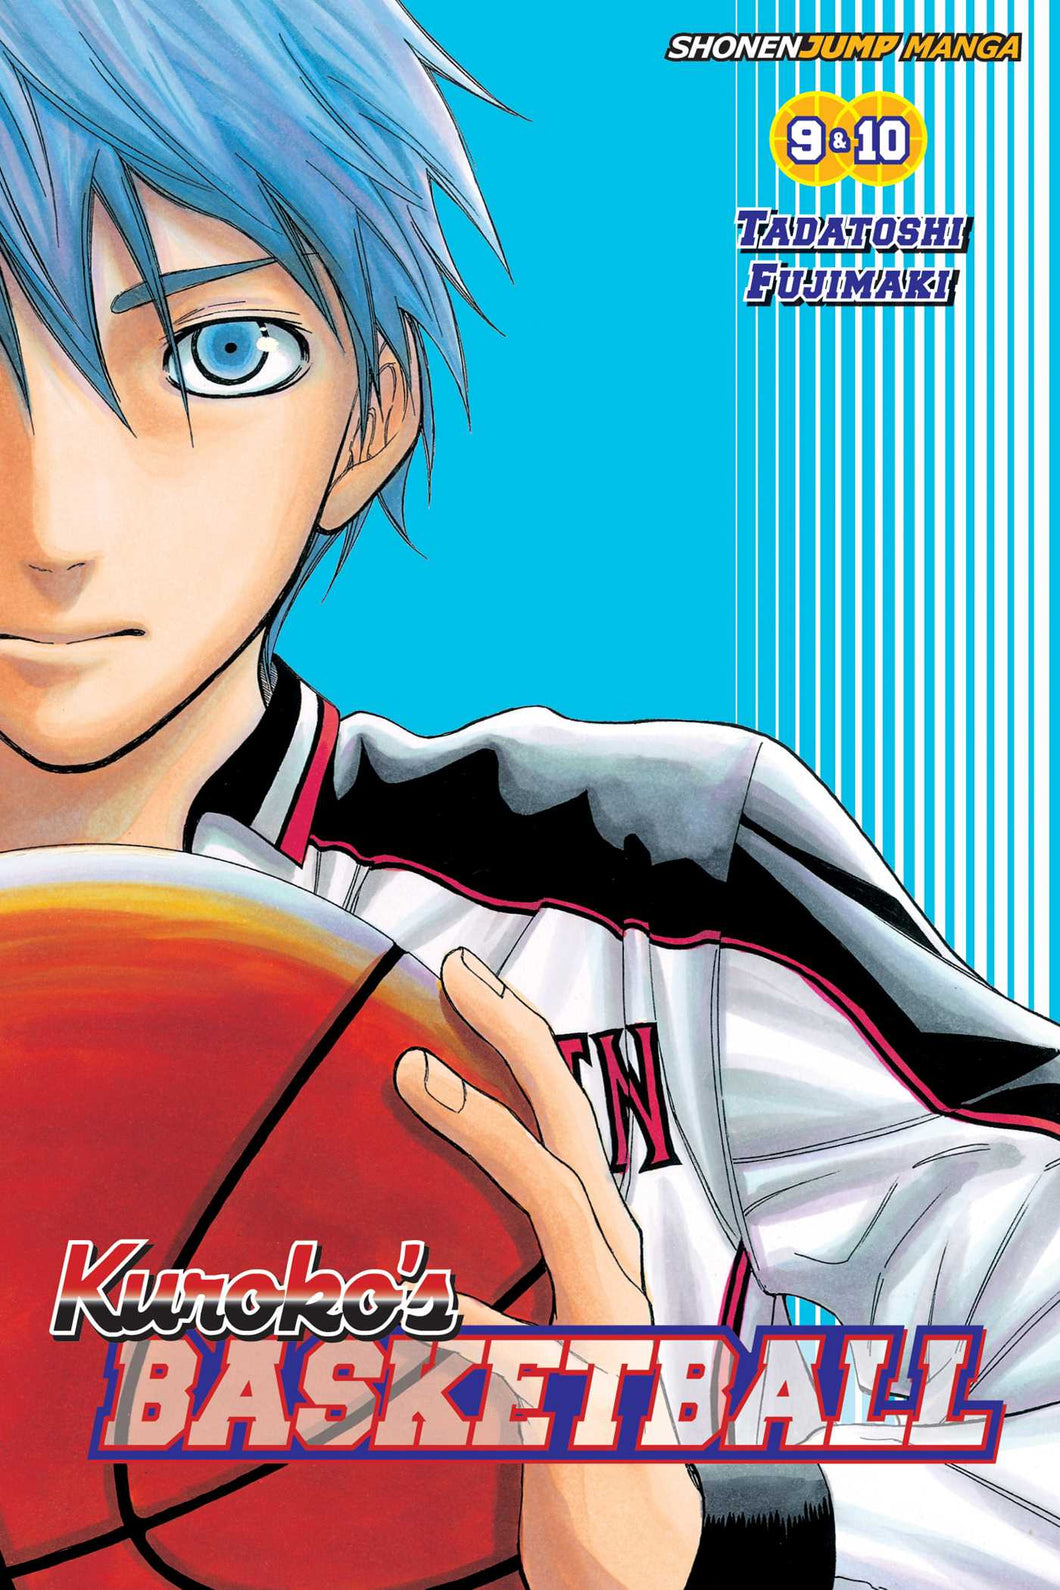 Kuroko's Basketball 2-in-1 Volume 5